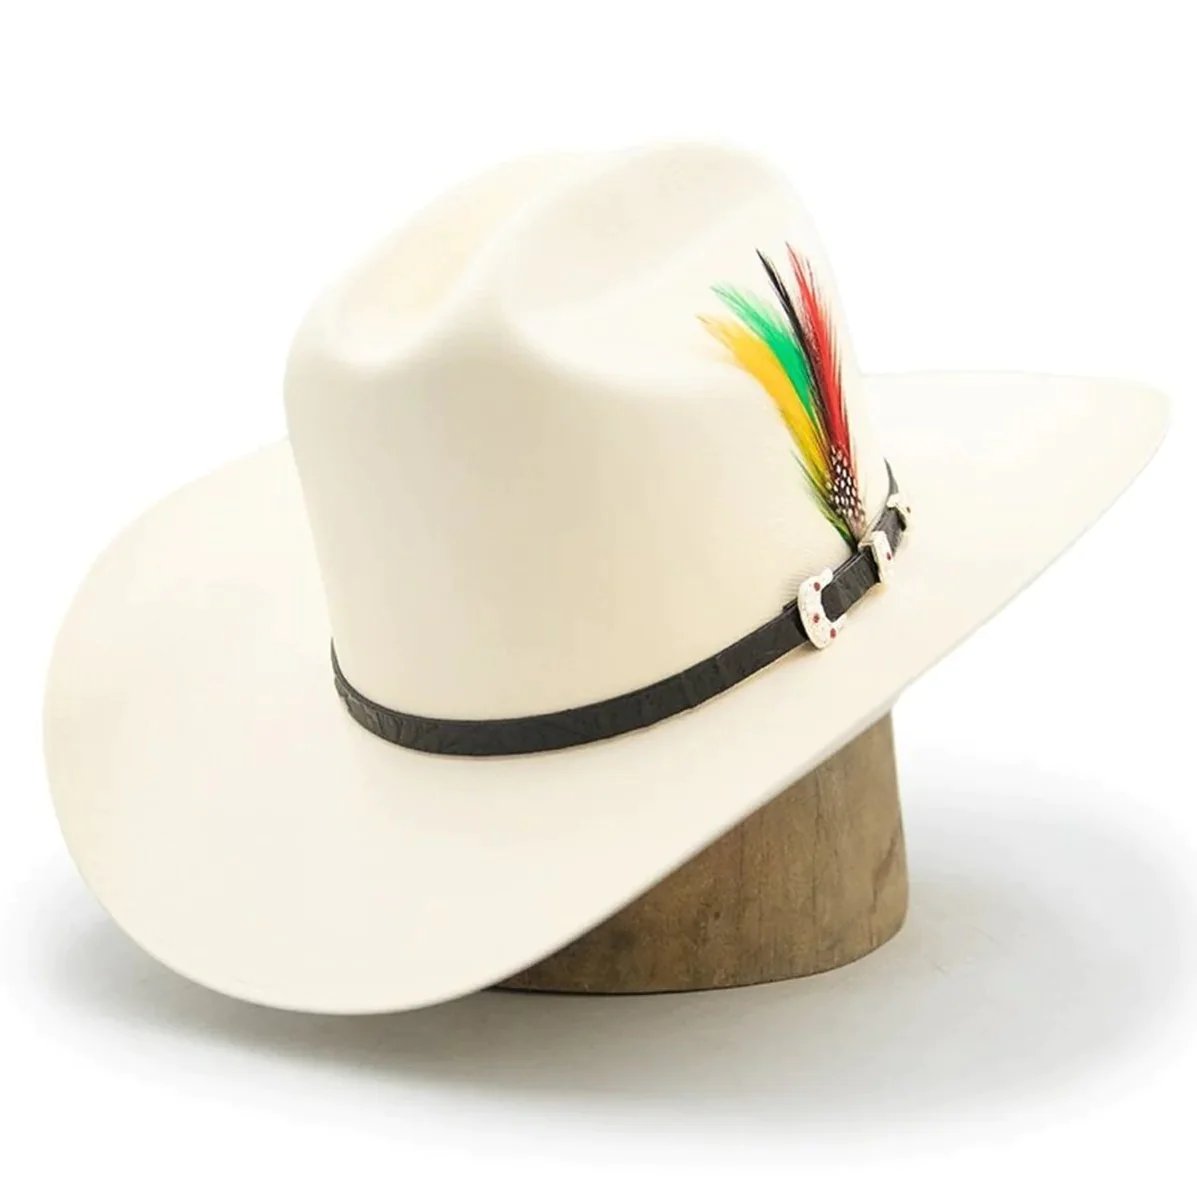 OFERTA: Sombrero Tombstone 5,000X Estilo Sinaloa US$199.99 con ENVIO GRATIS. Para comprar llama al 323-312-3317 o haz click en este link: caballobronco.com/collections/so… #caballobronco #texanas #sombrero #sombreros #sombrerosvaqueros #cowboyhat #sombrerosinaloa #sombrerostombstone #straw